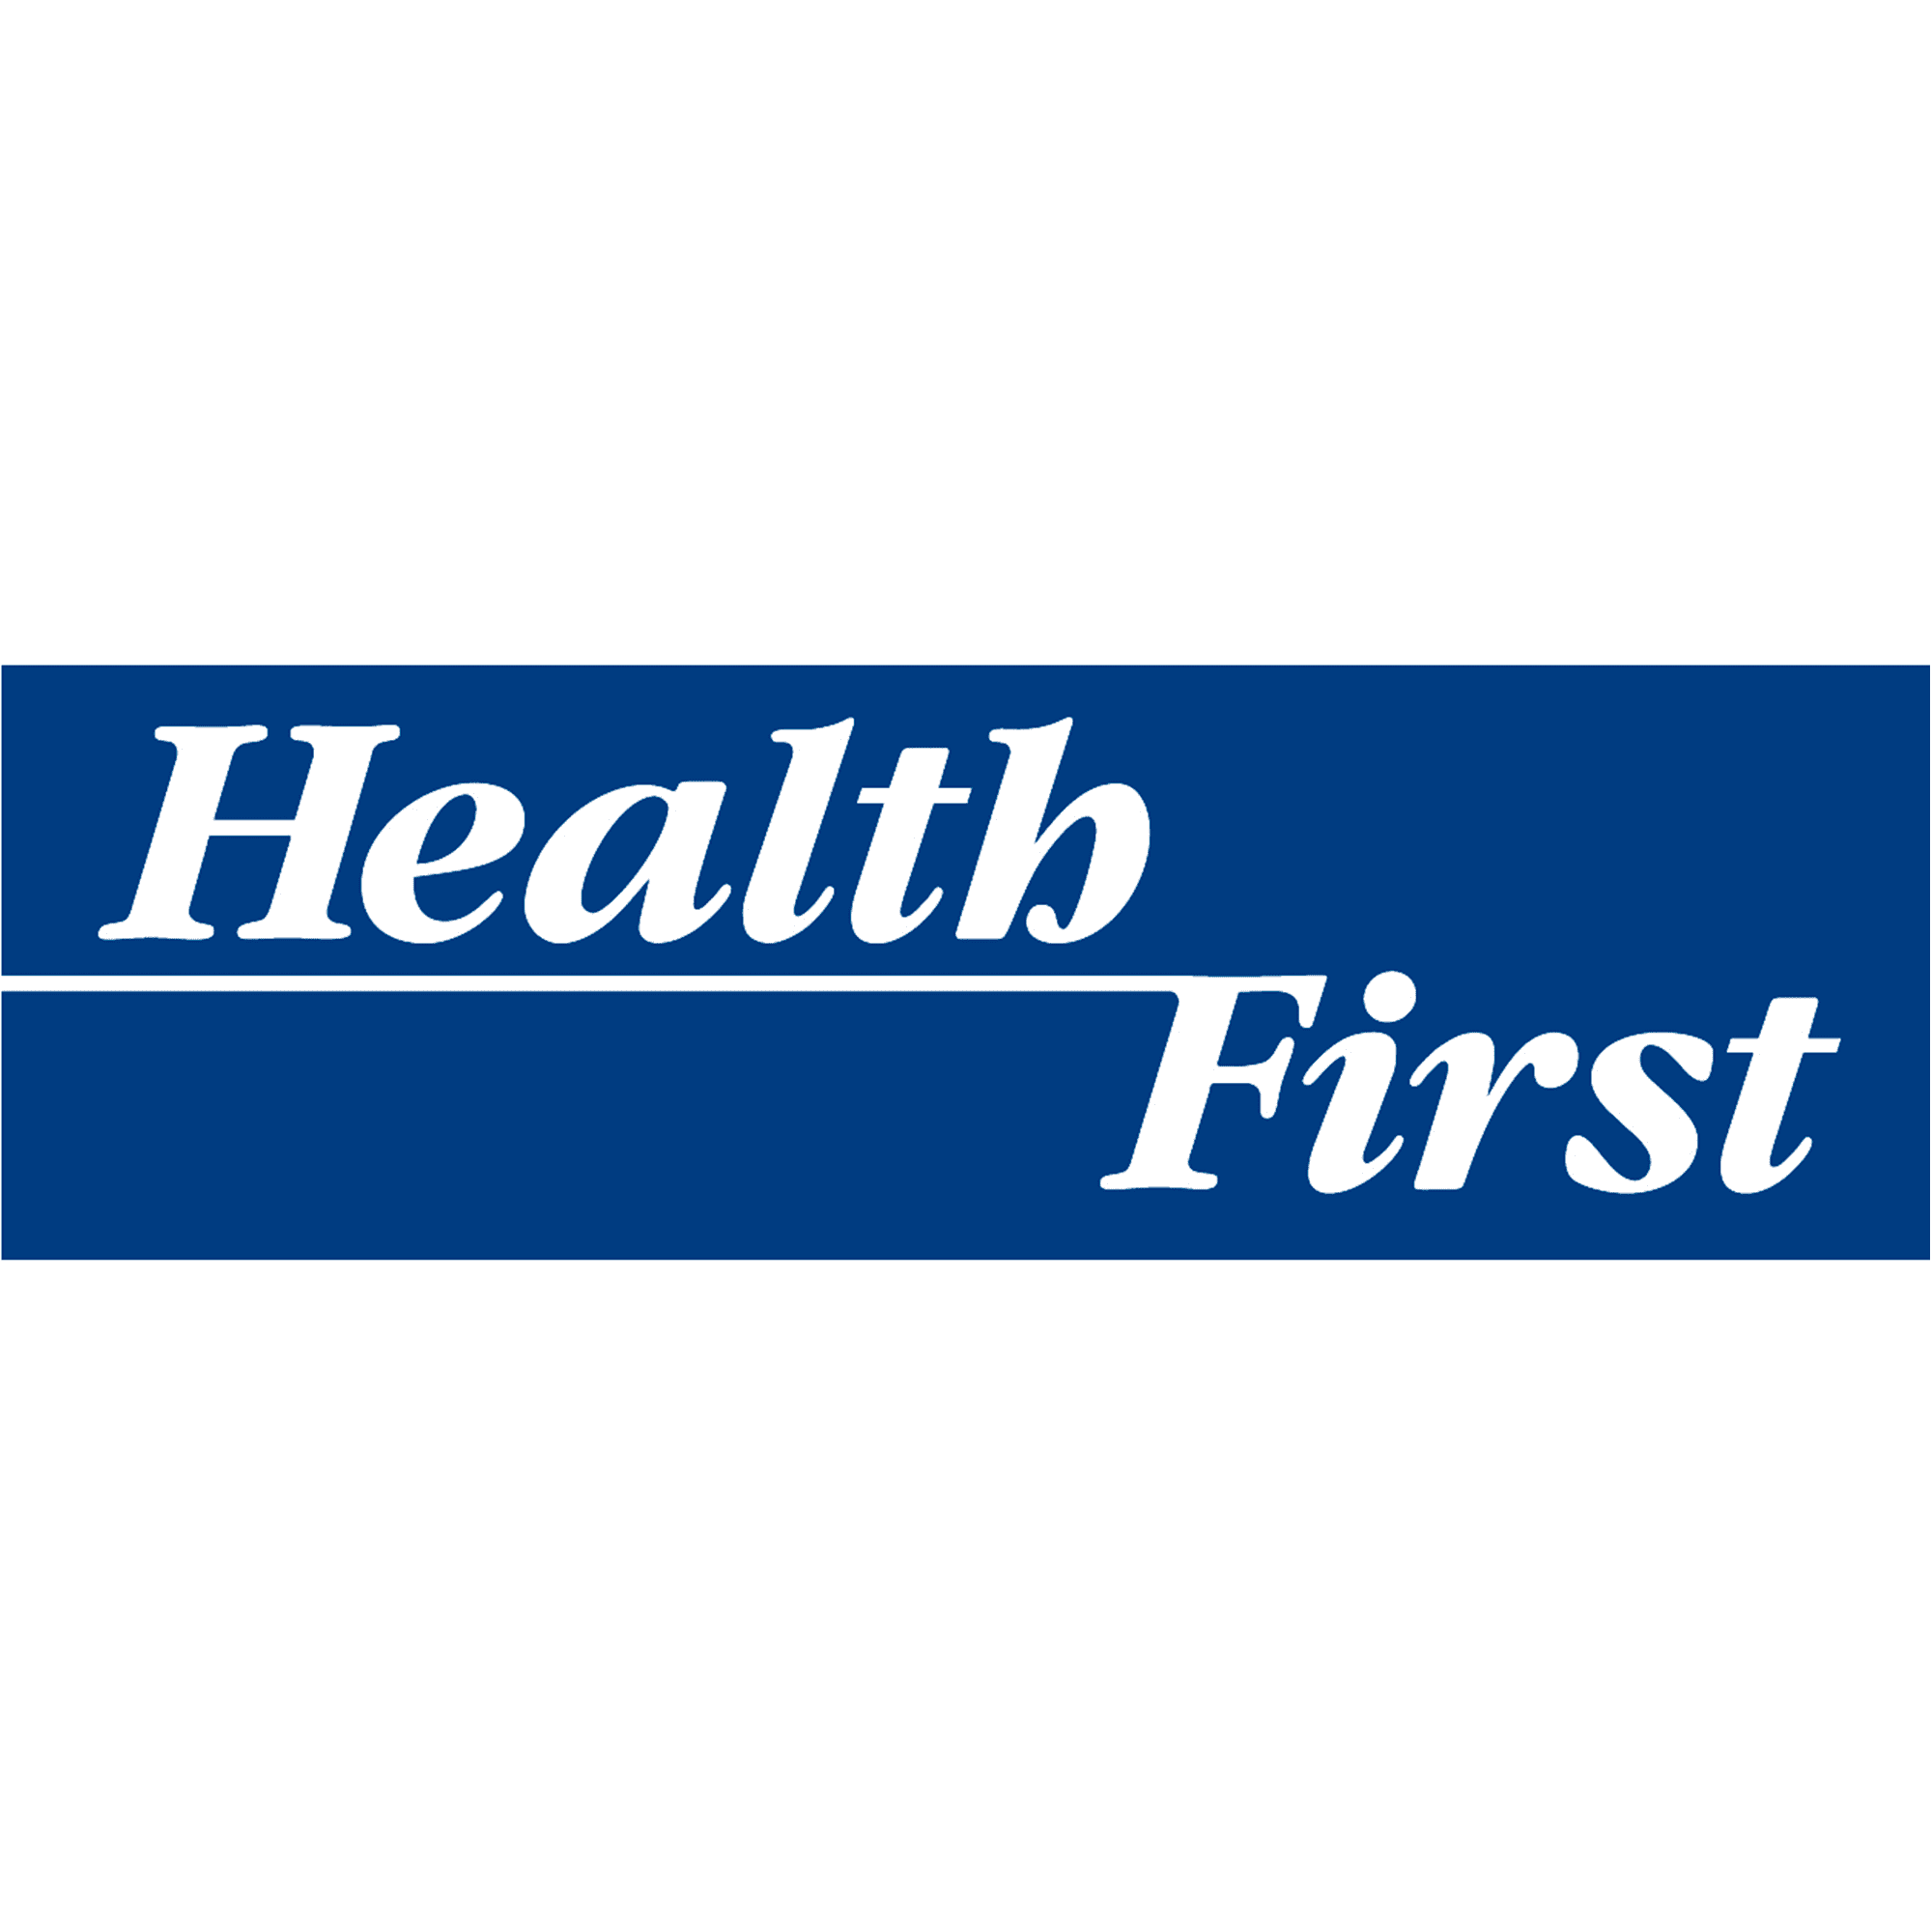 Health First